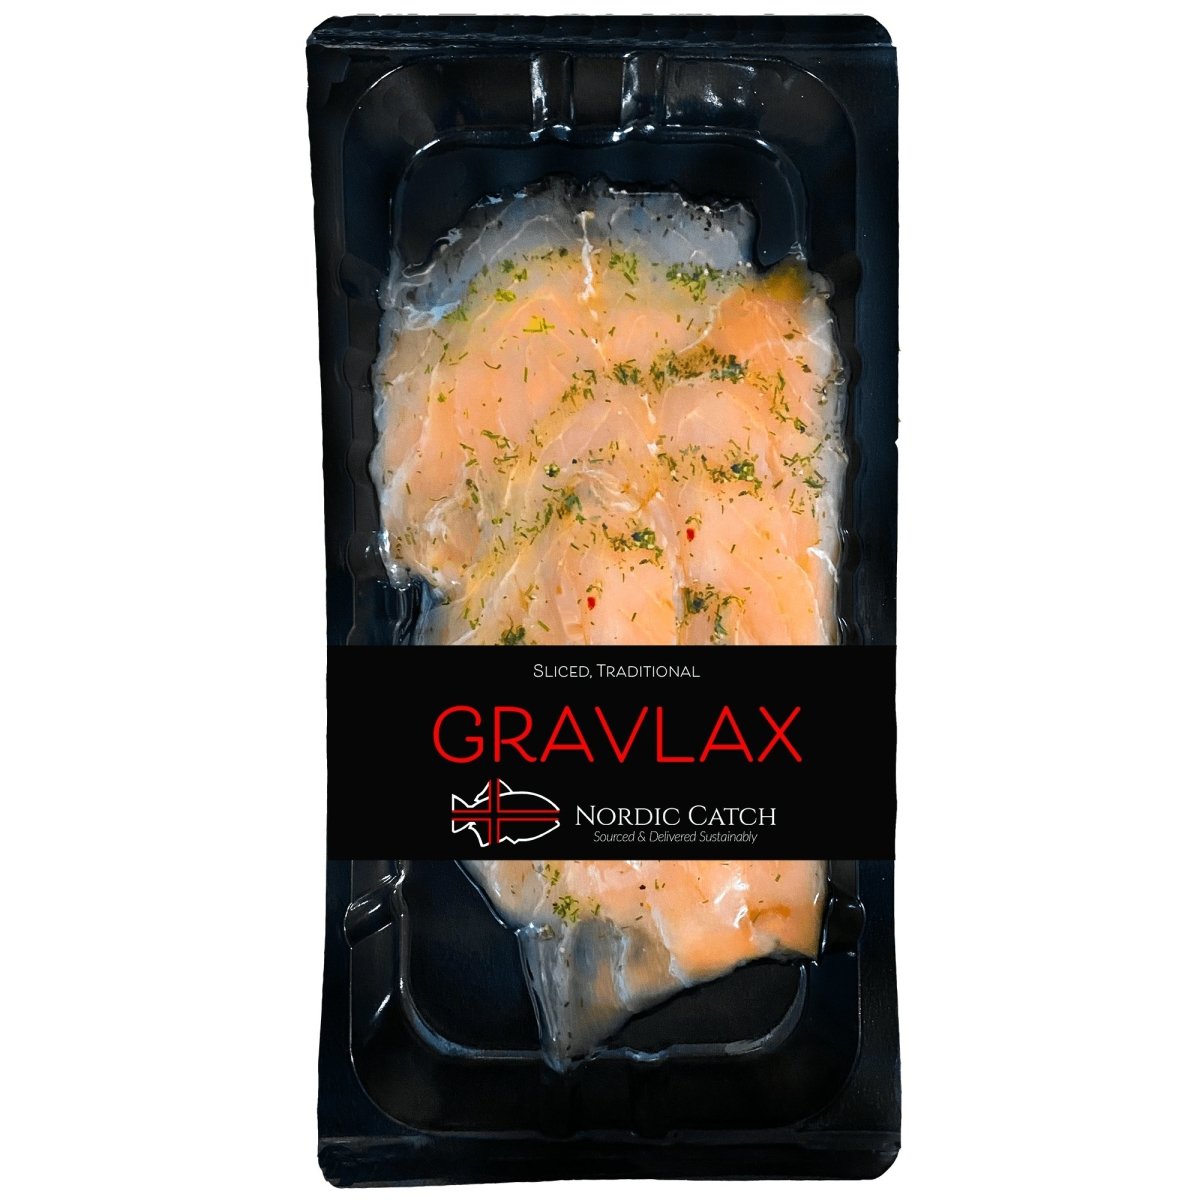 Gravlax (Cured Salmon) (2-3 servings) - Nordic Catch